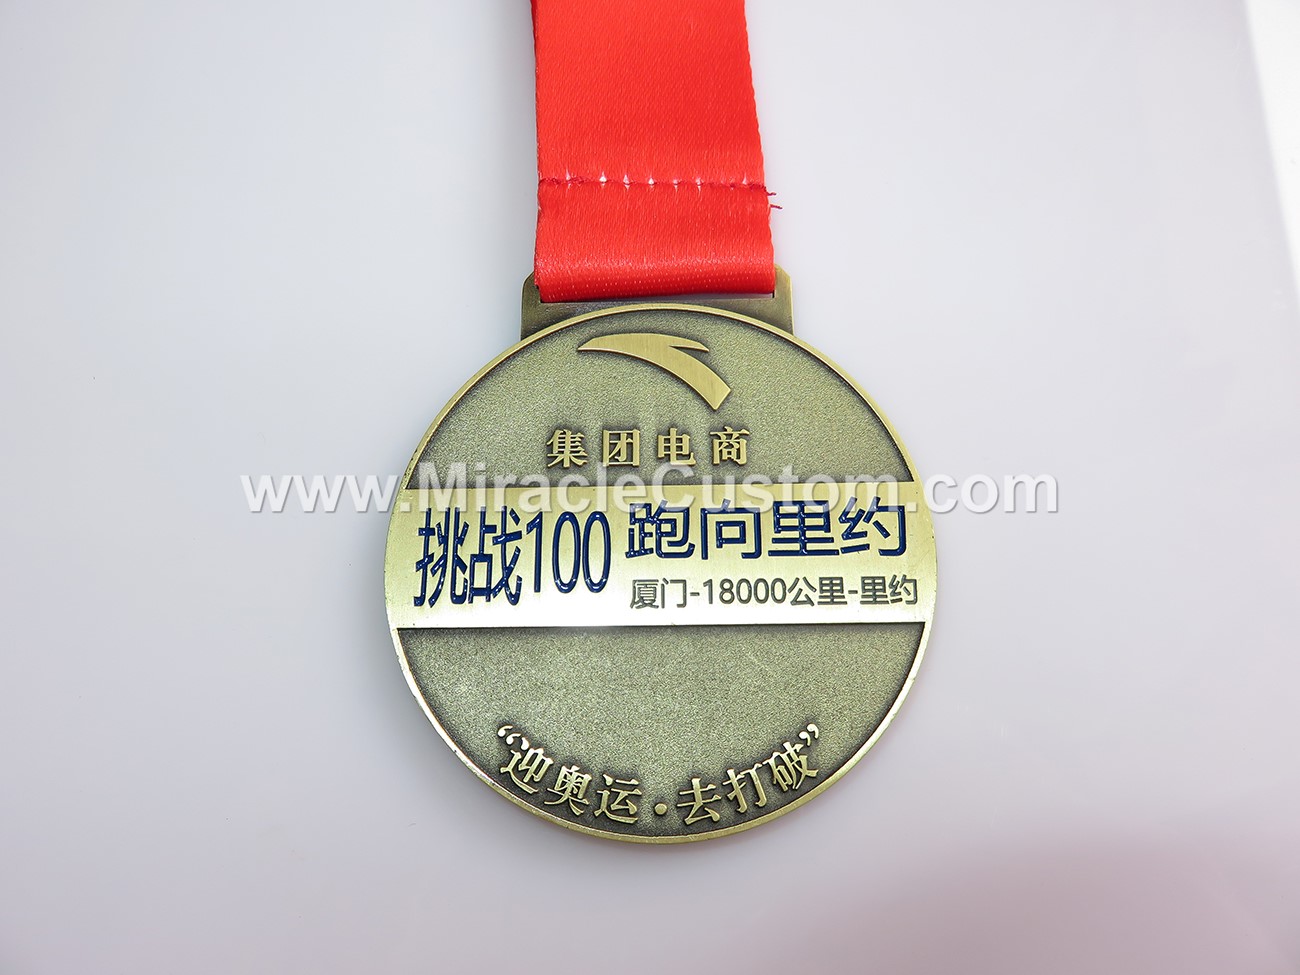 bespoke running medals